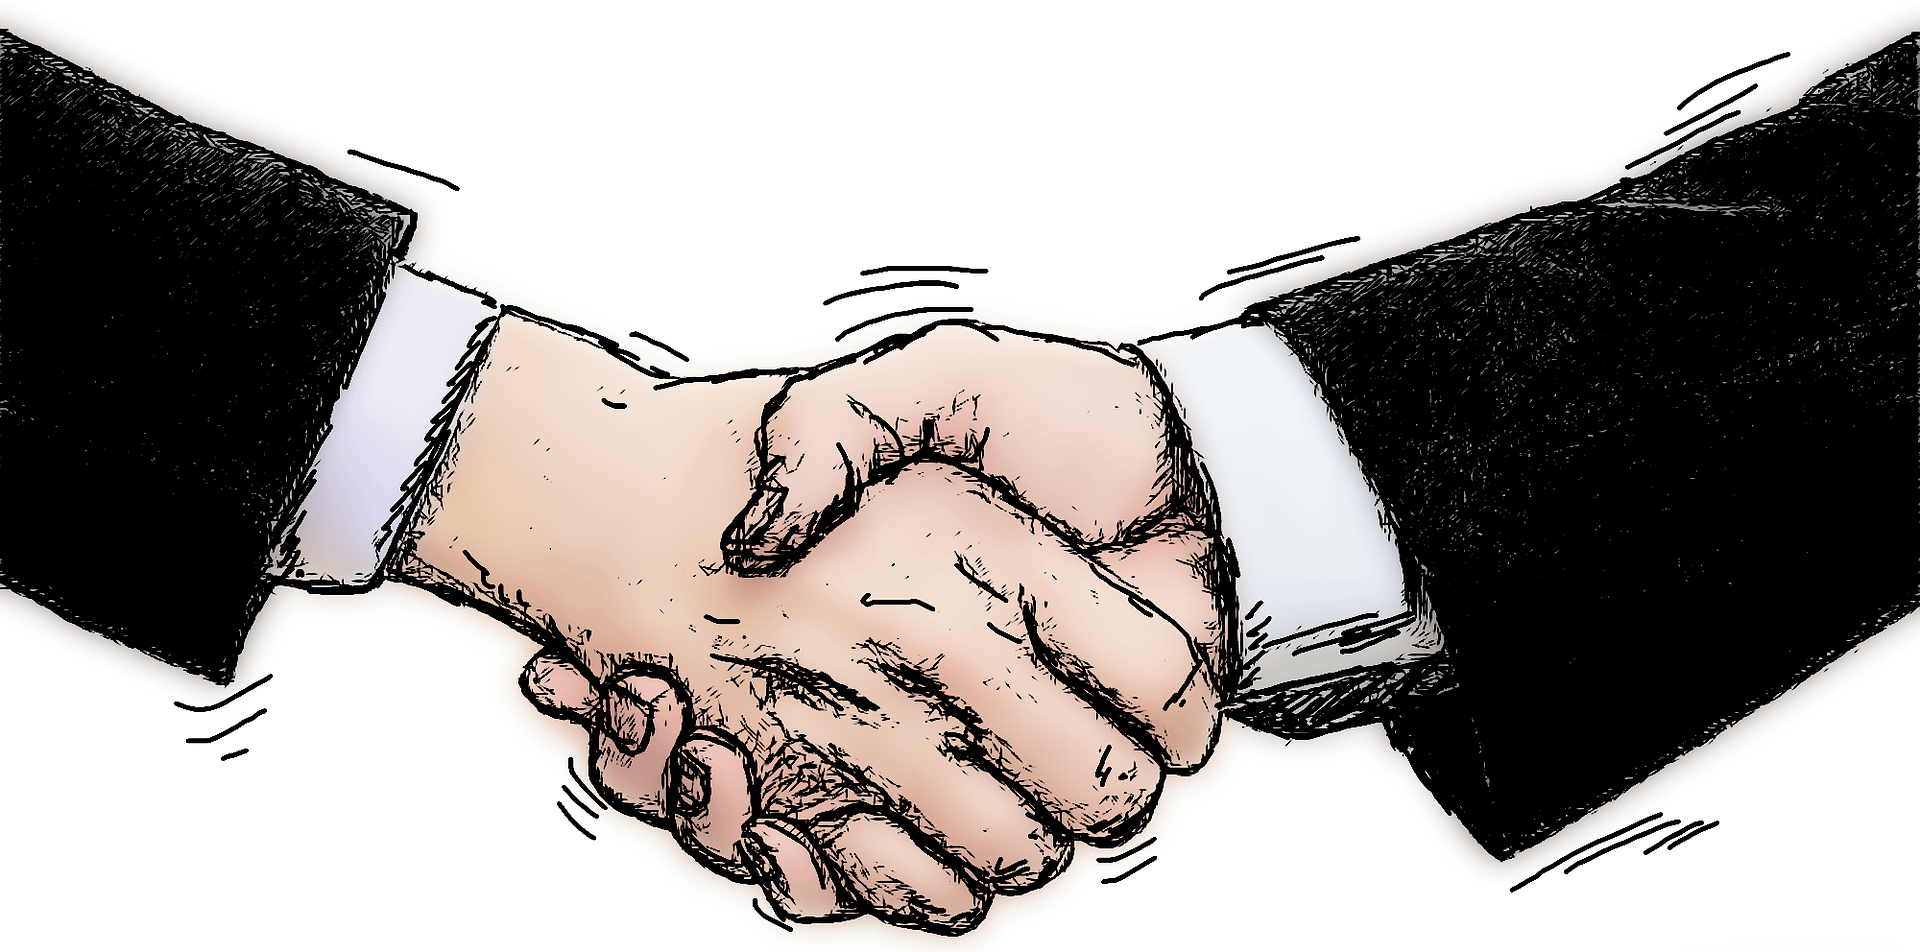 shaking hands negotiations